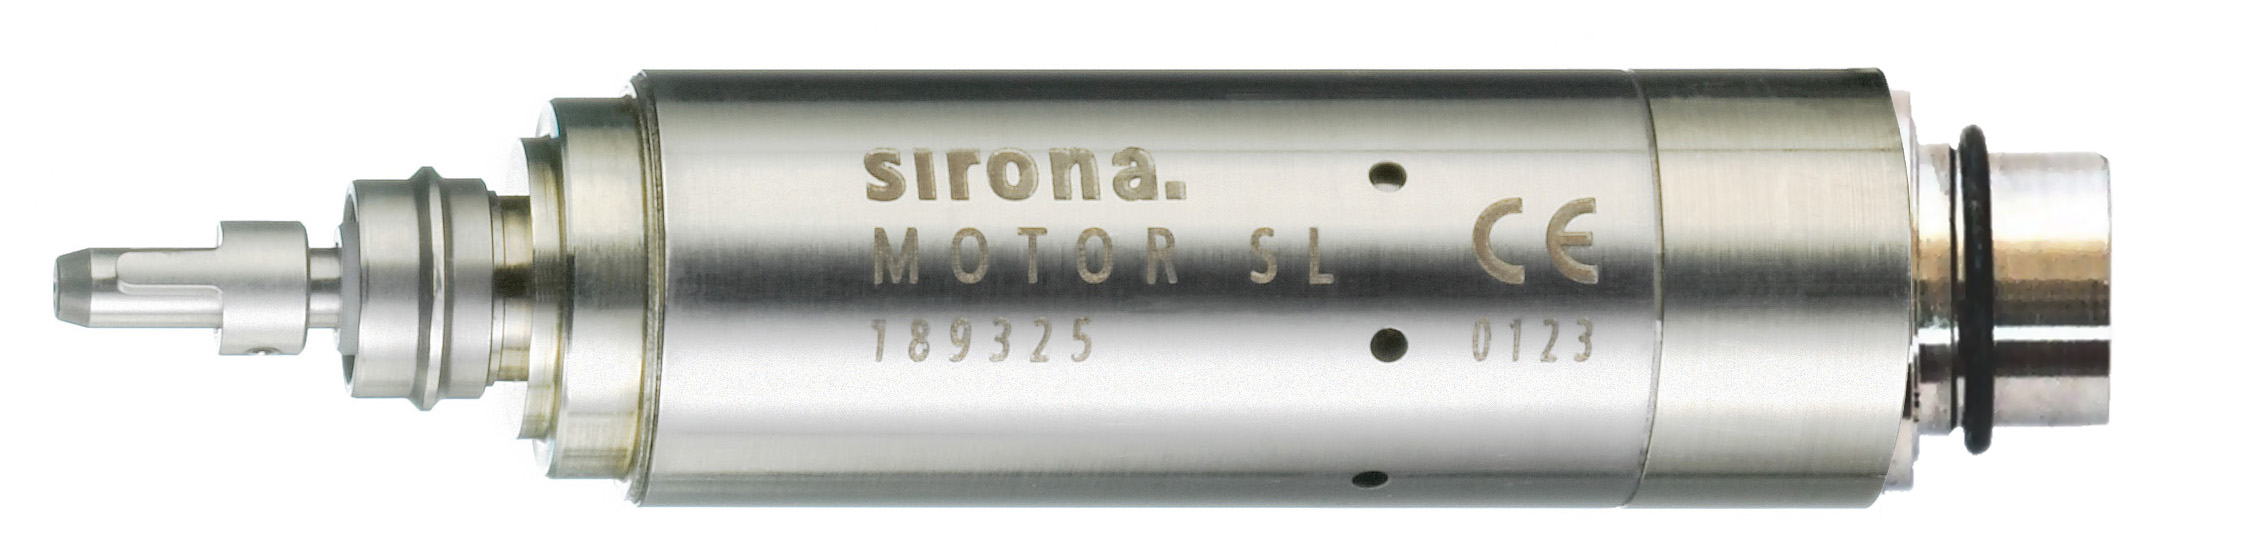 Микромотор электрический SL без адаптера Dentsply Sirona 4176710